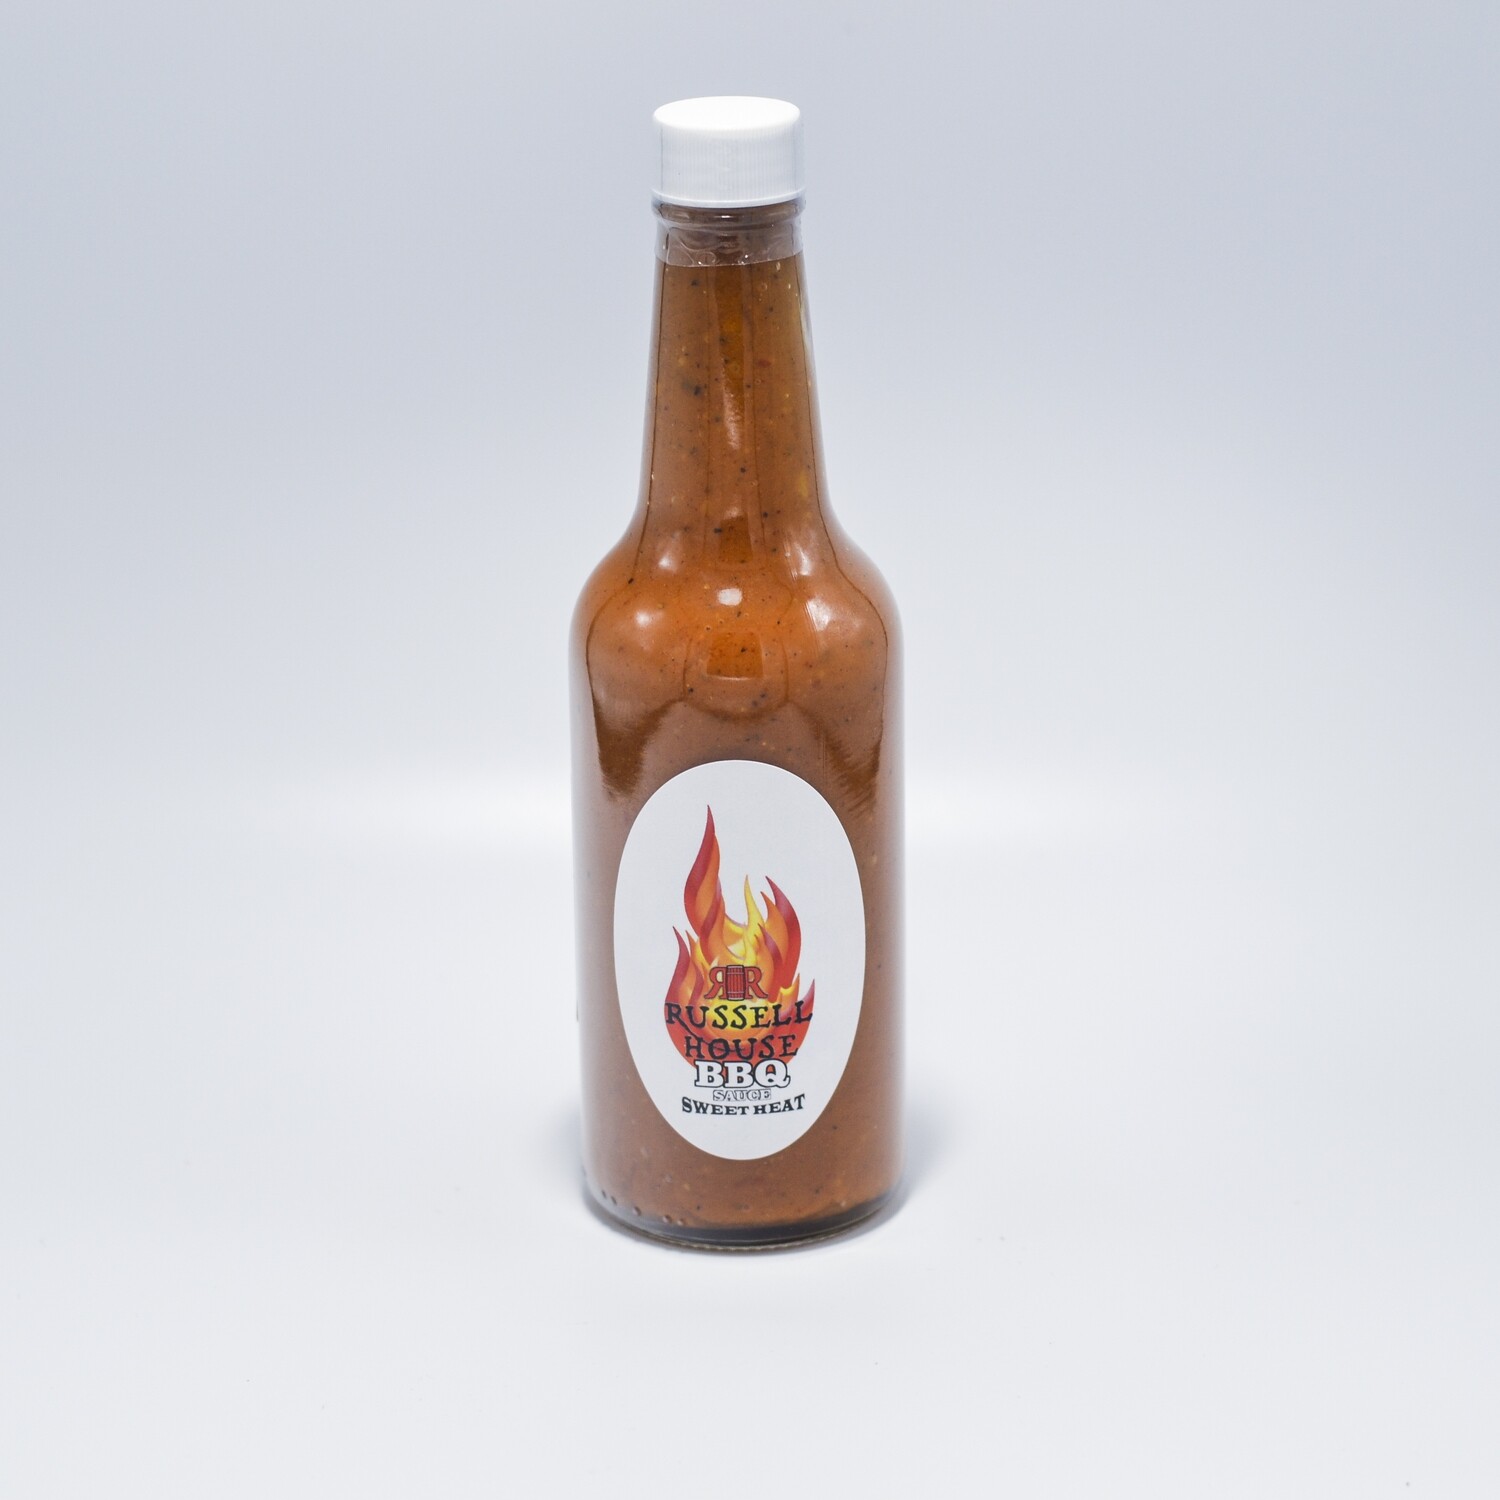 Russell House BBQ Sauce - Sweet Heat